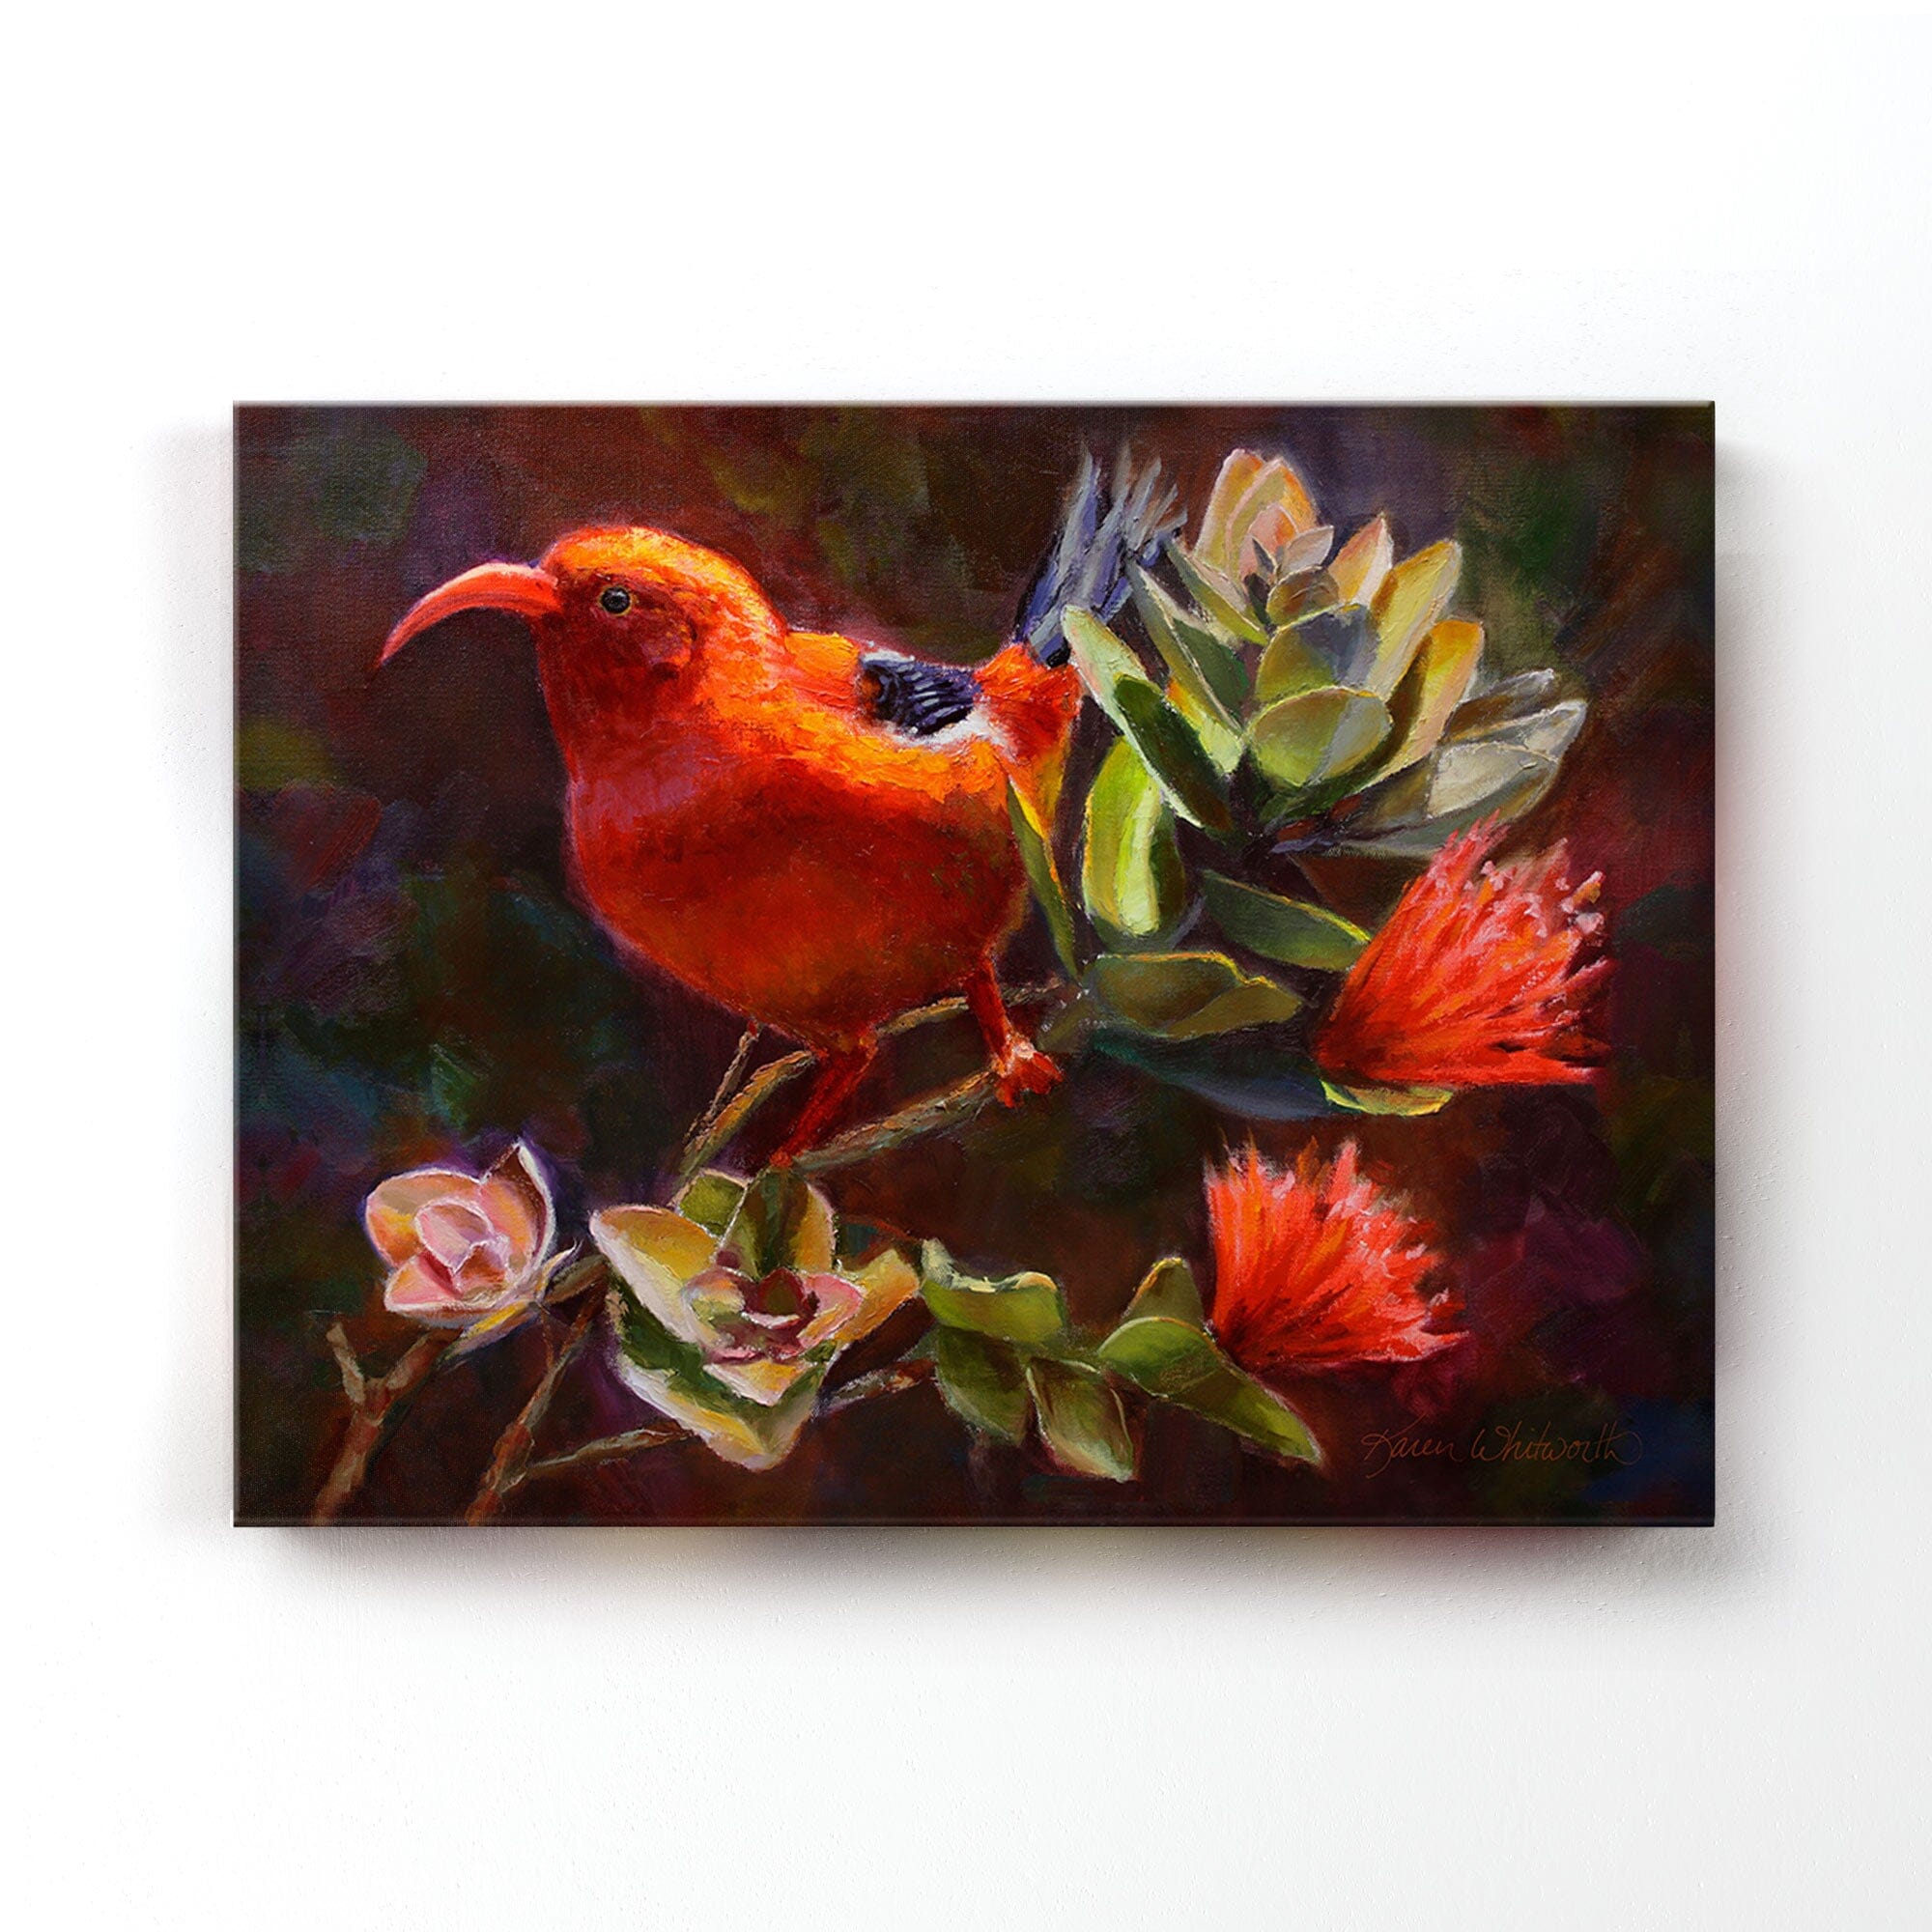 Hawaiian canvas art flower painting of ohia tree and iiwi bird by Hawaii artist Karen Whitworth